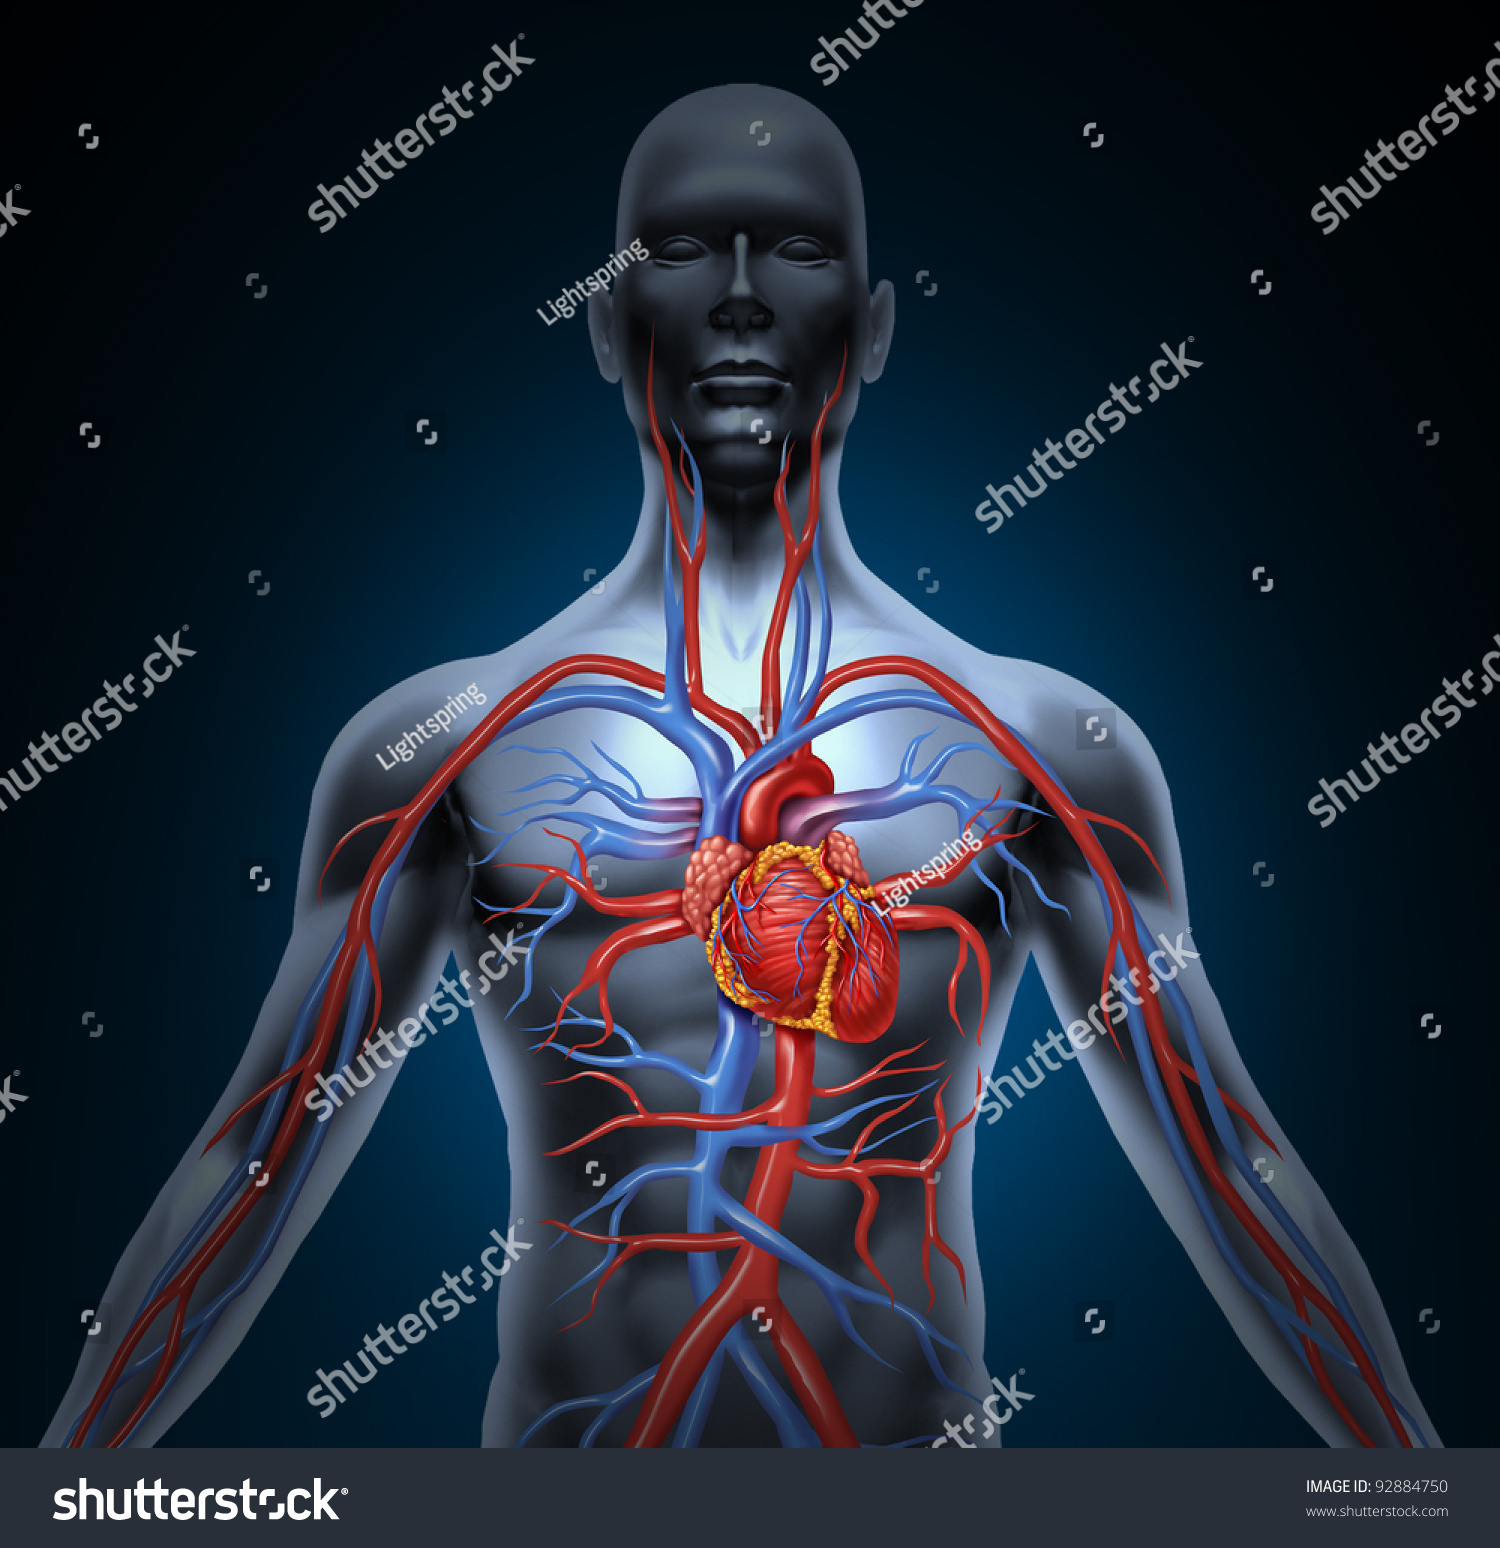 Human Circulation Cardiovascular System Heart Anatomy Stock ...